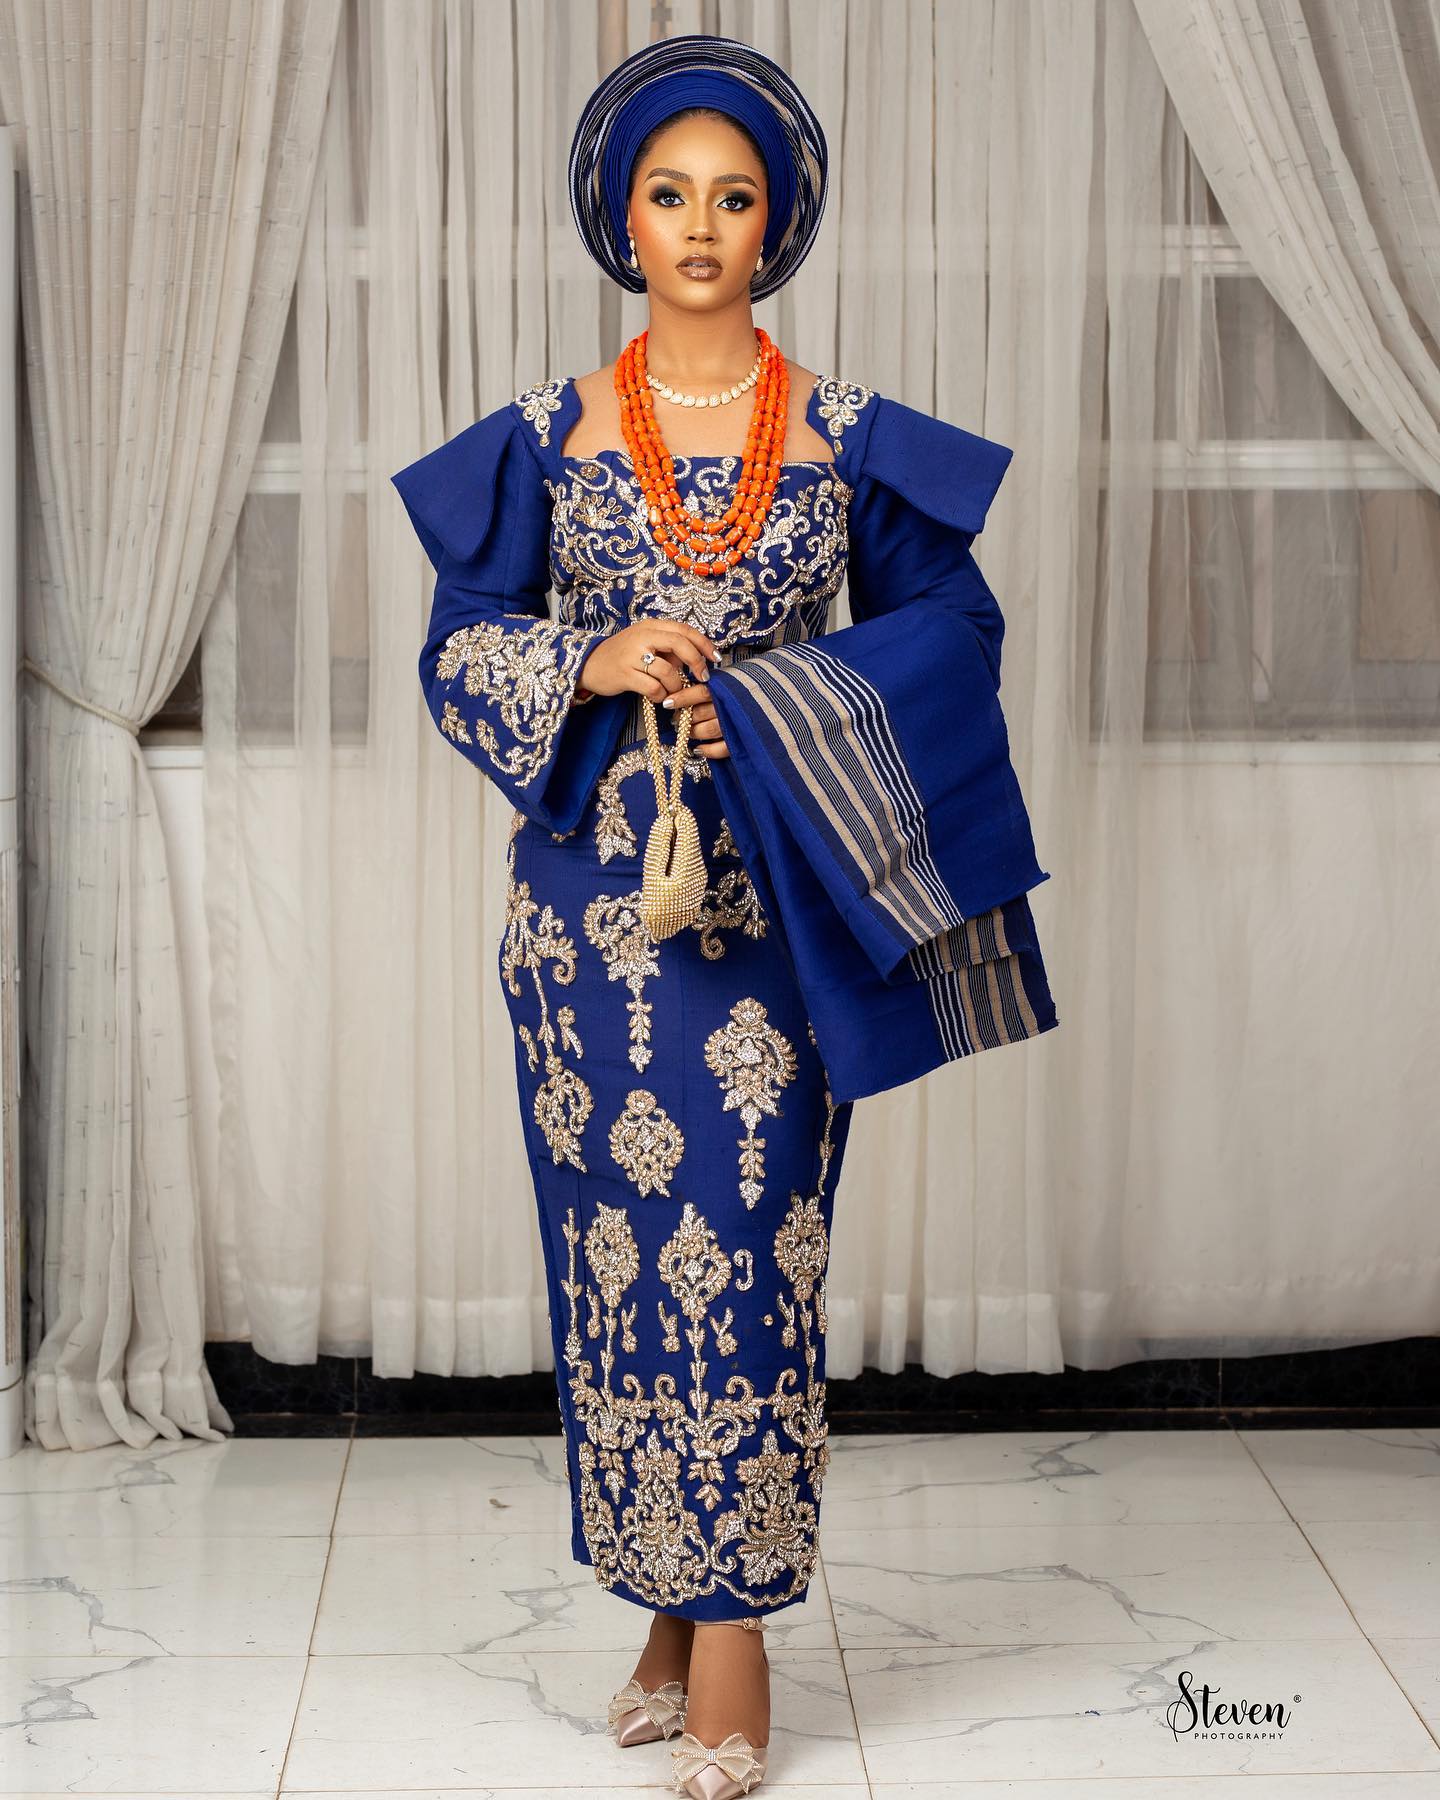 Yoruba Bridal Look Is All Shades Of Royal Elegance 